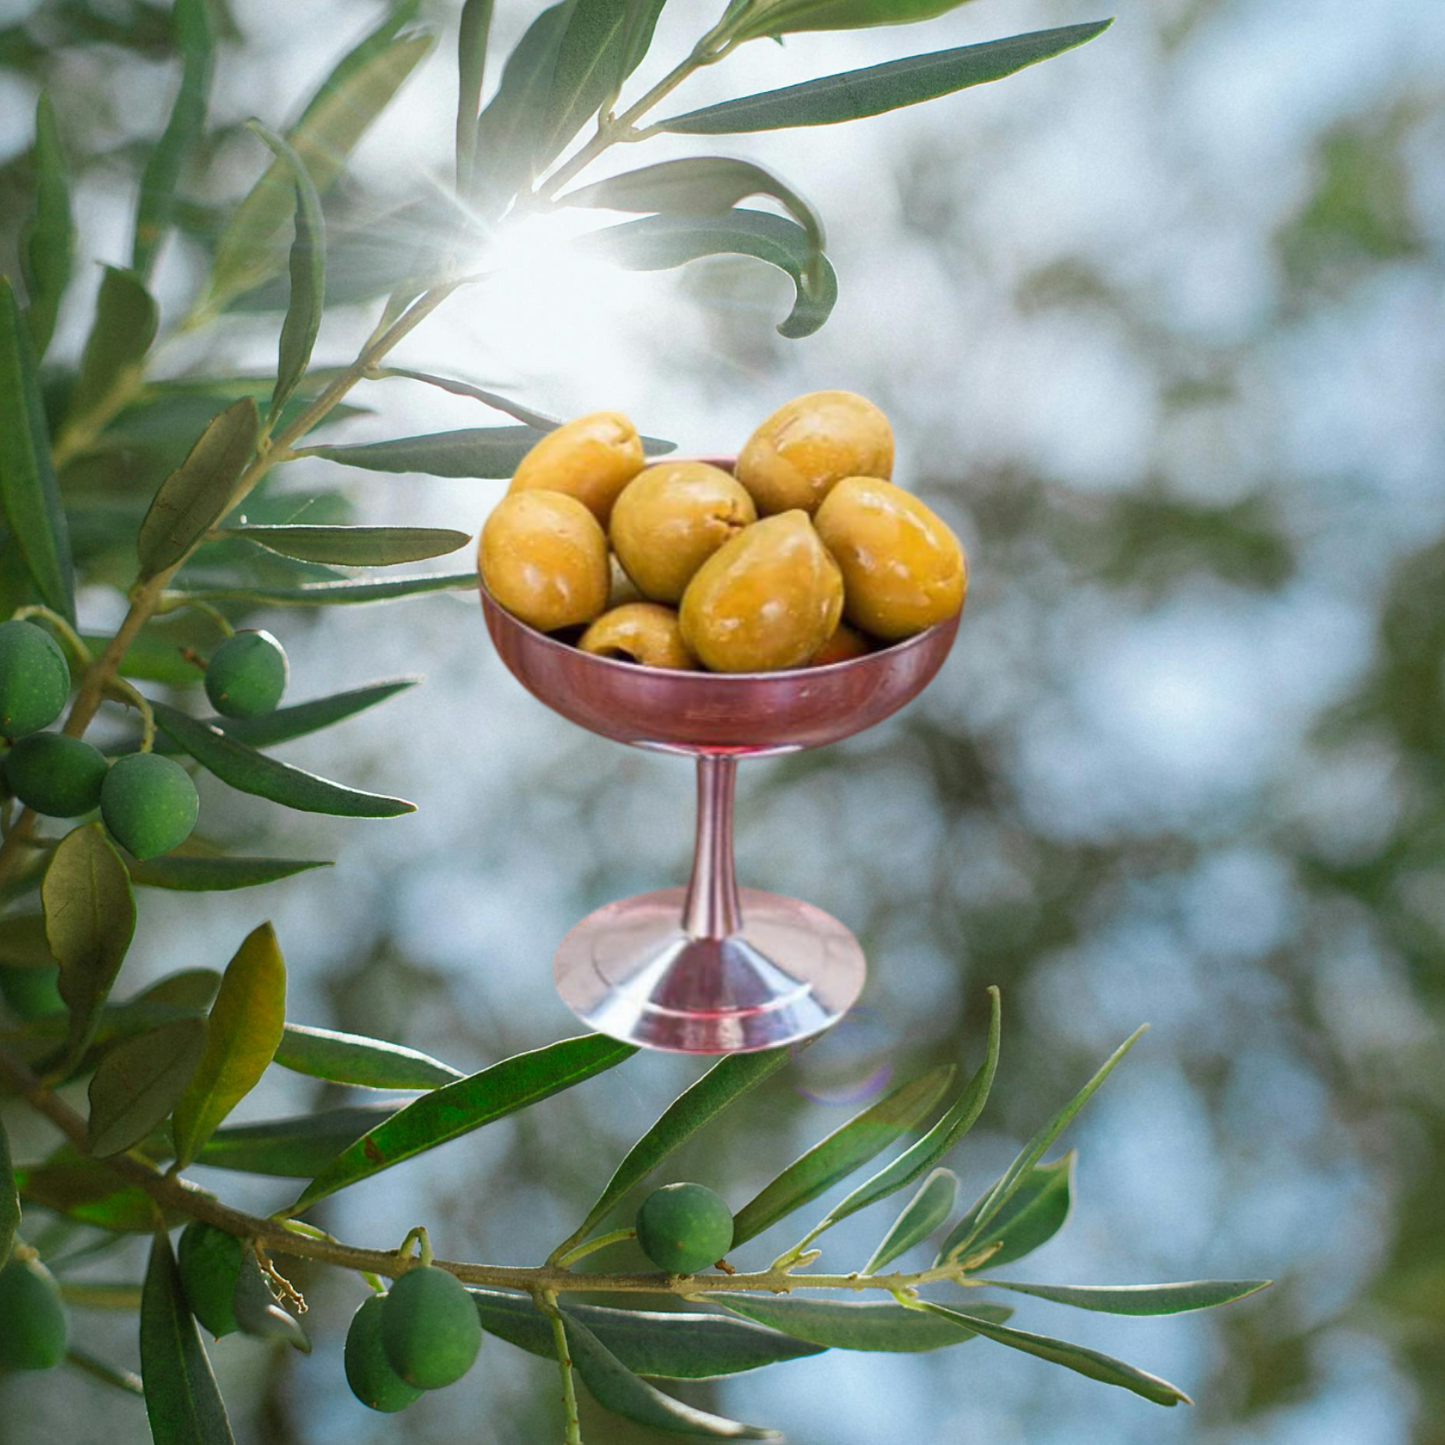 Nocellara olives in salt brine